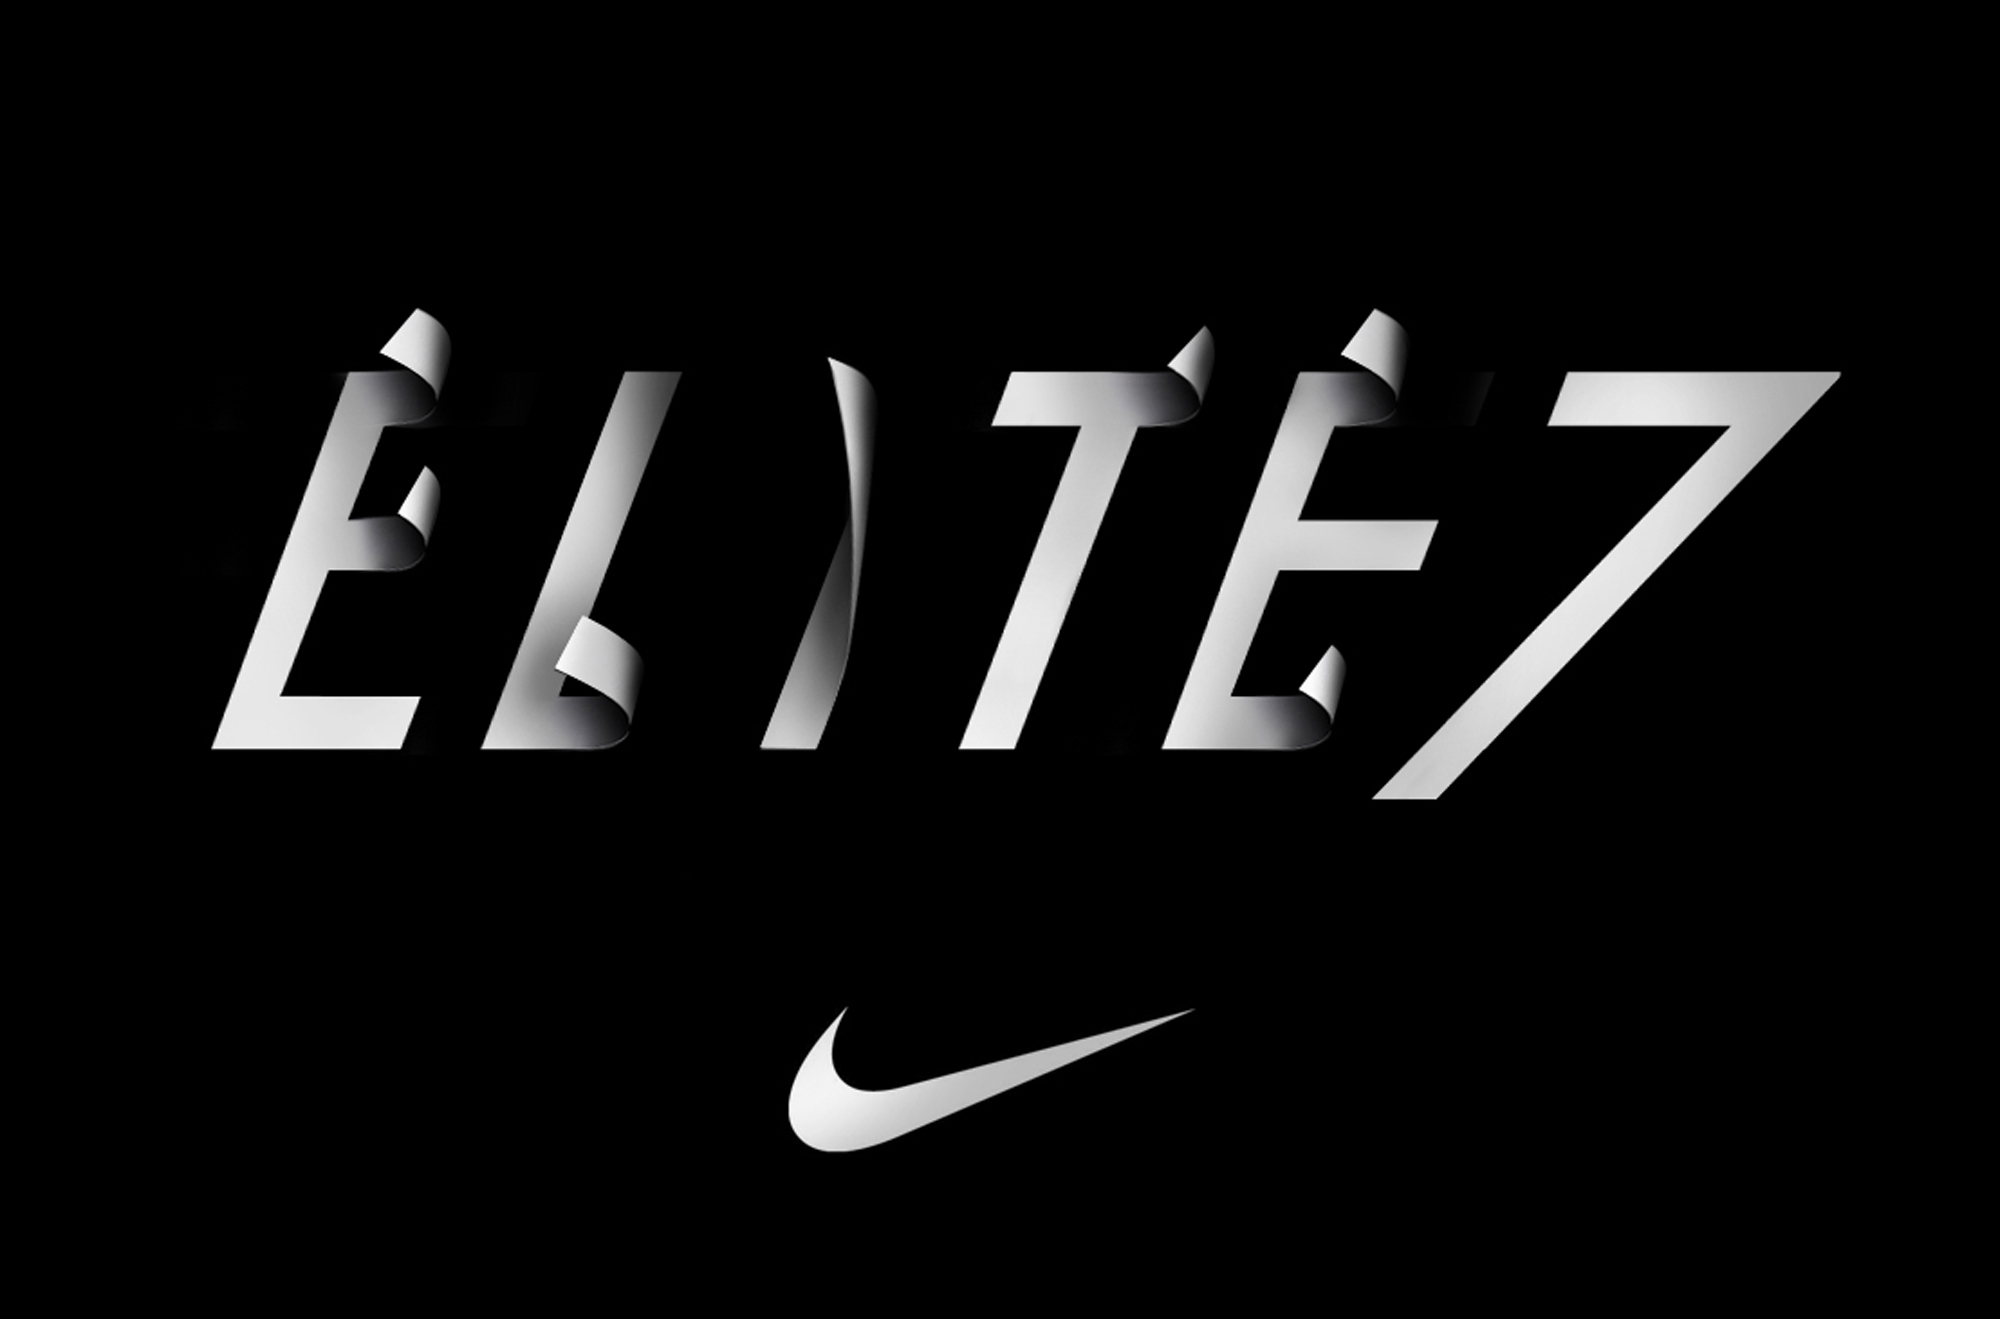 Elite 7 Nike